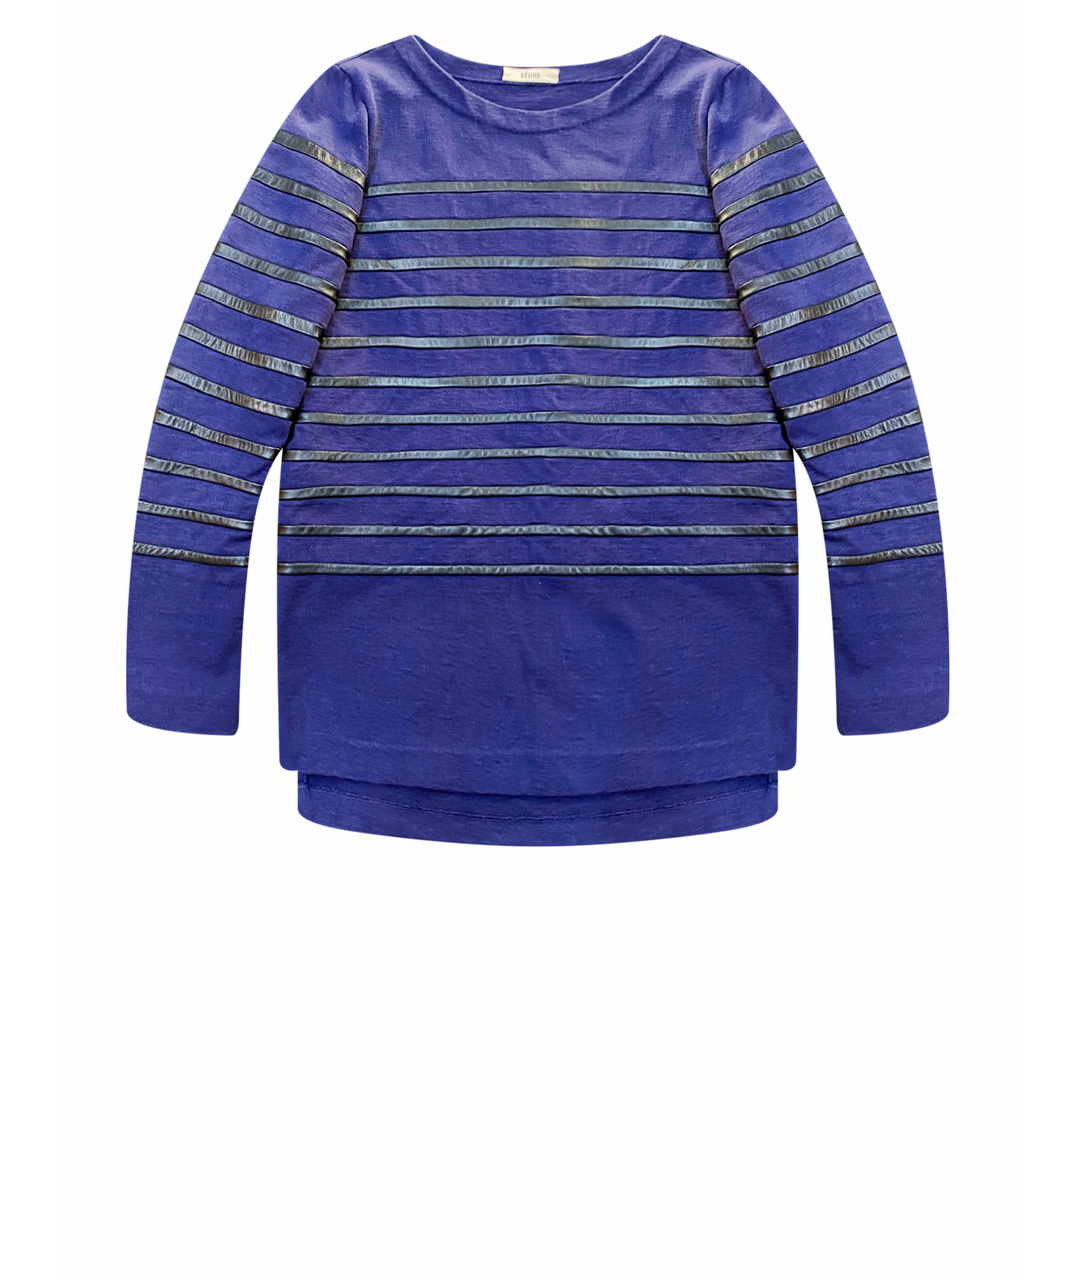 CELINE PRE-OWNED Синий хлопковый джемпер / свитер, фото 1